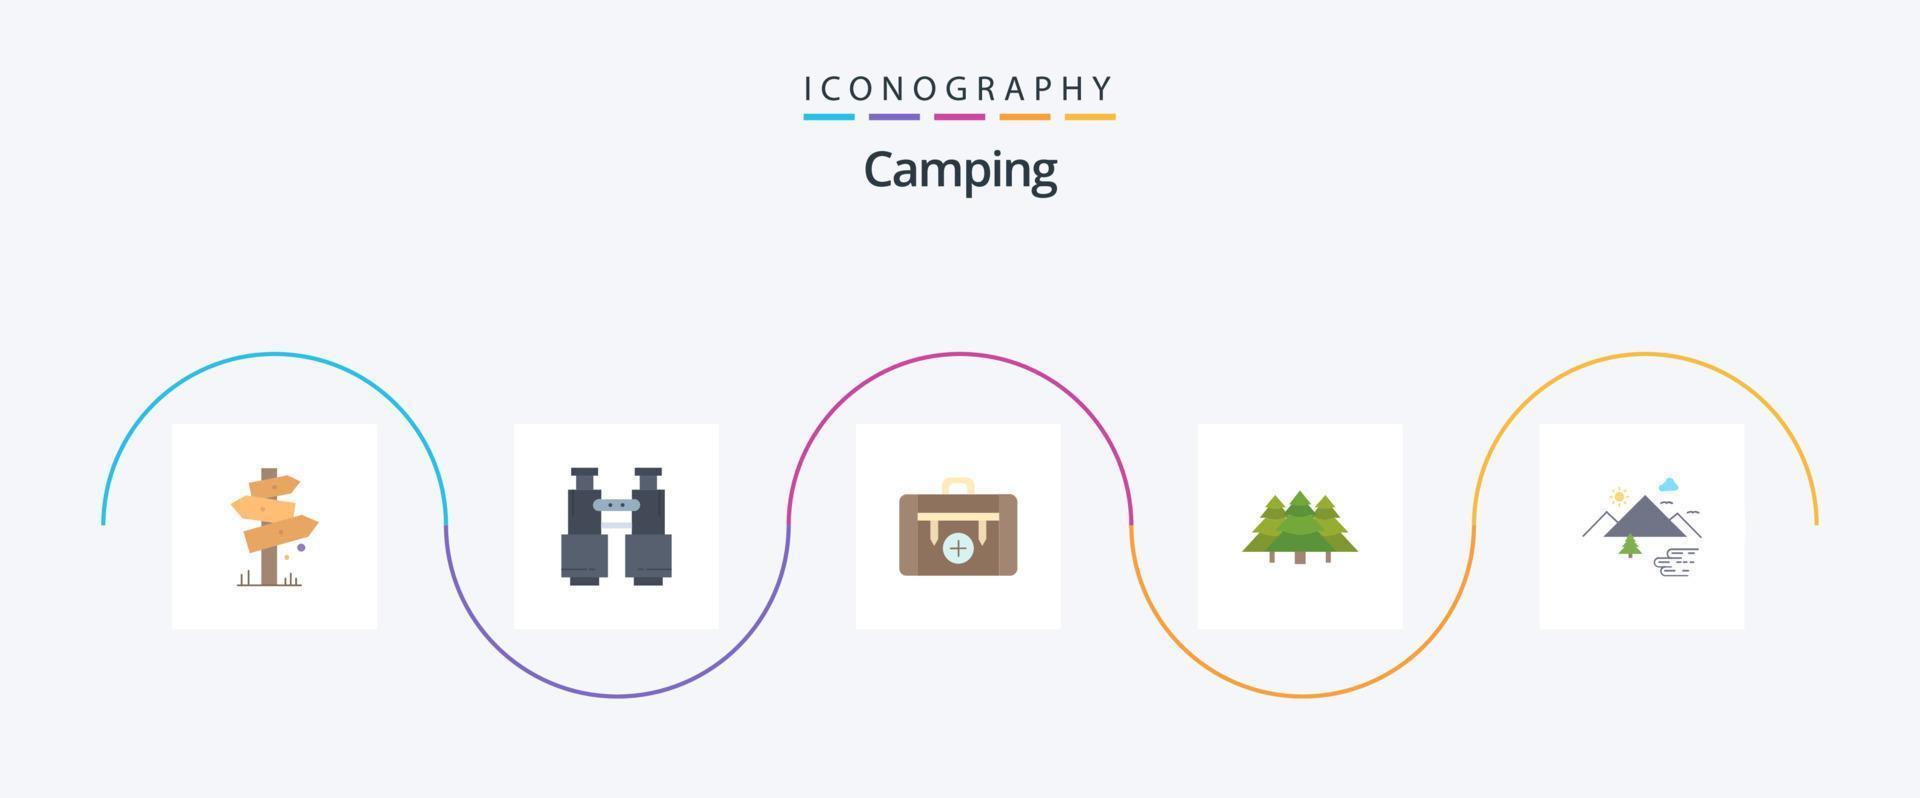 camping platt 5 ikon packa Inklusive camping. bagage. utforska. vandring. camping vektor